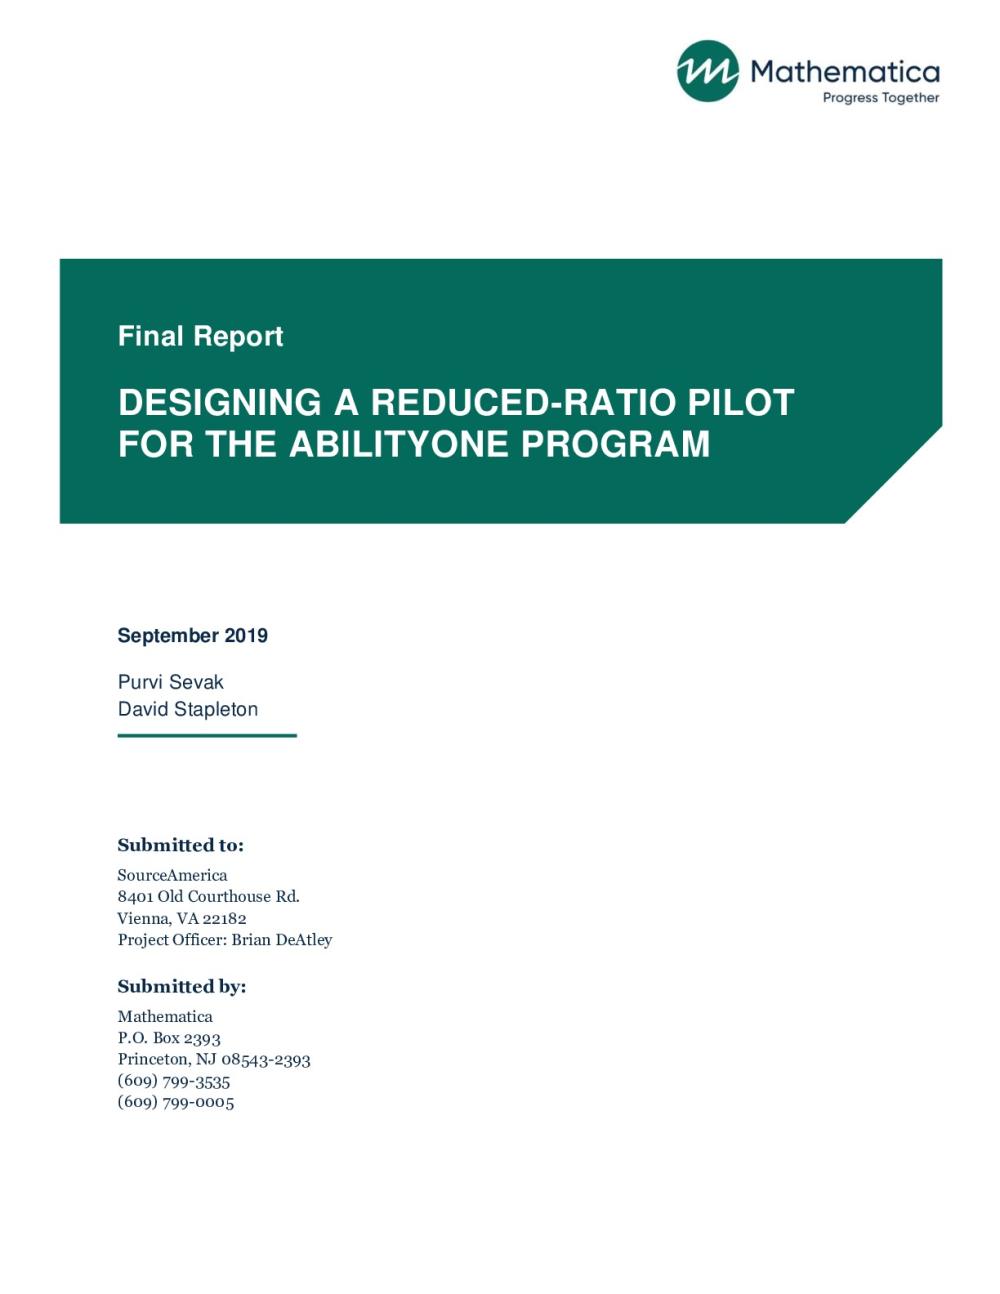 Designing a Reduced-Ratio Pilot for the AbilityOne Program